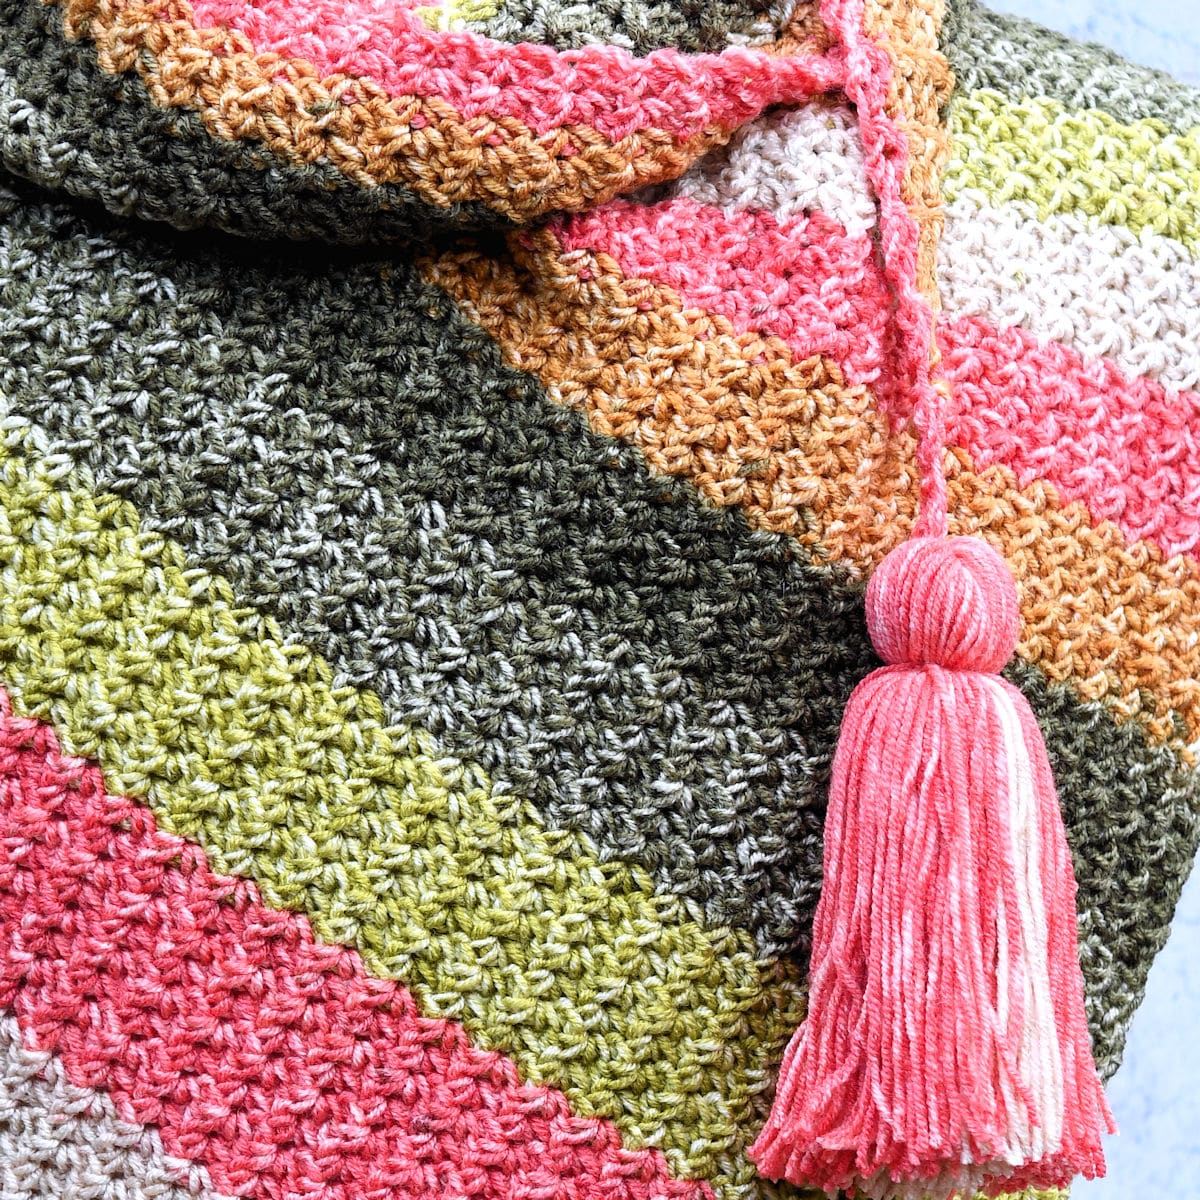 Make It Crochet: Crochet Triangle Shawl | The Right Wrap by Kim Guzman